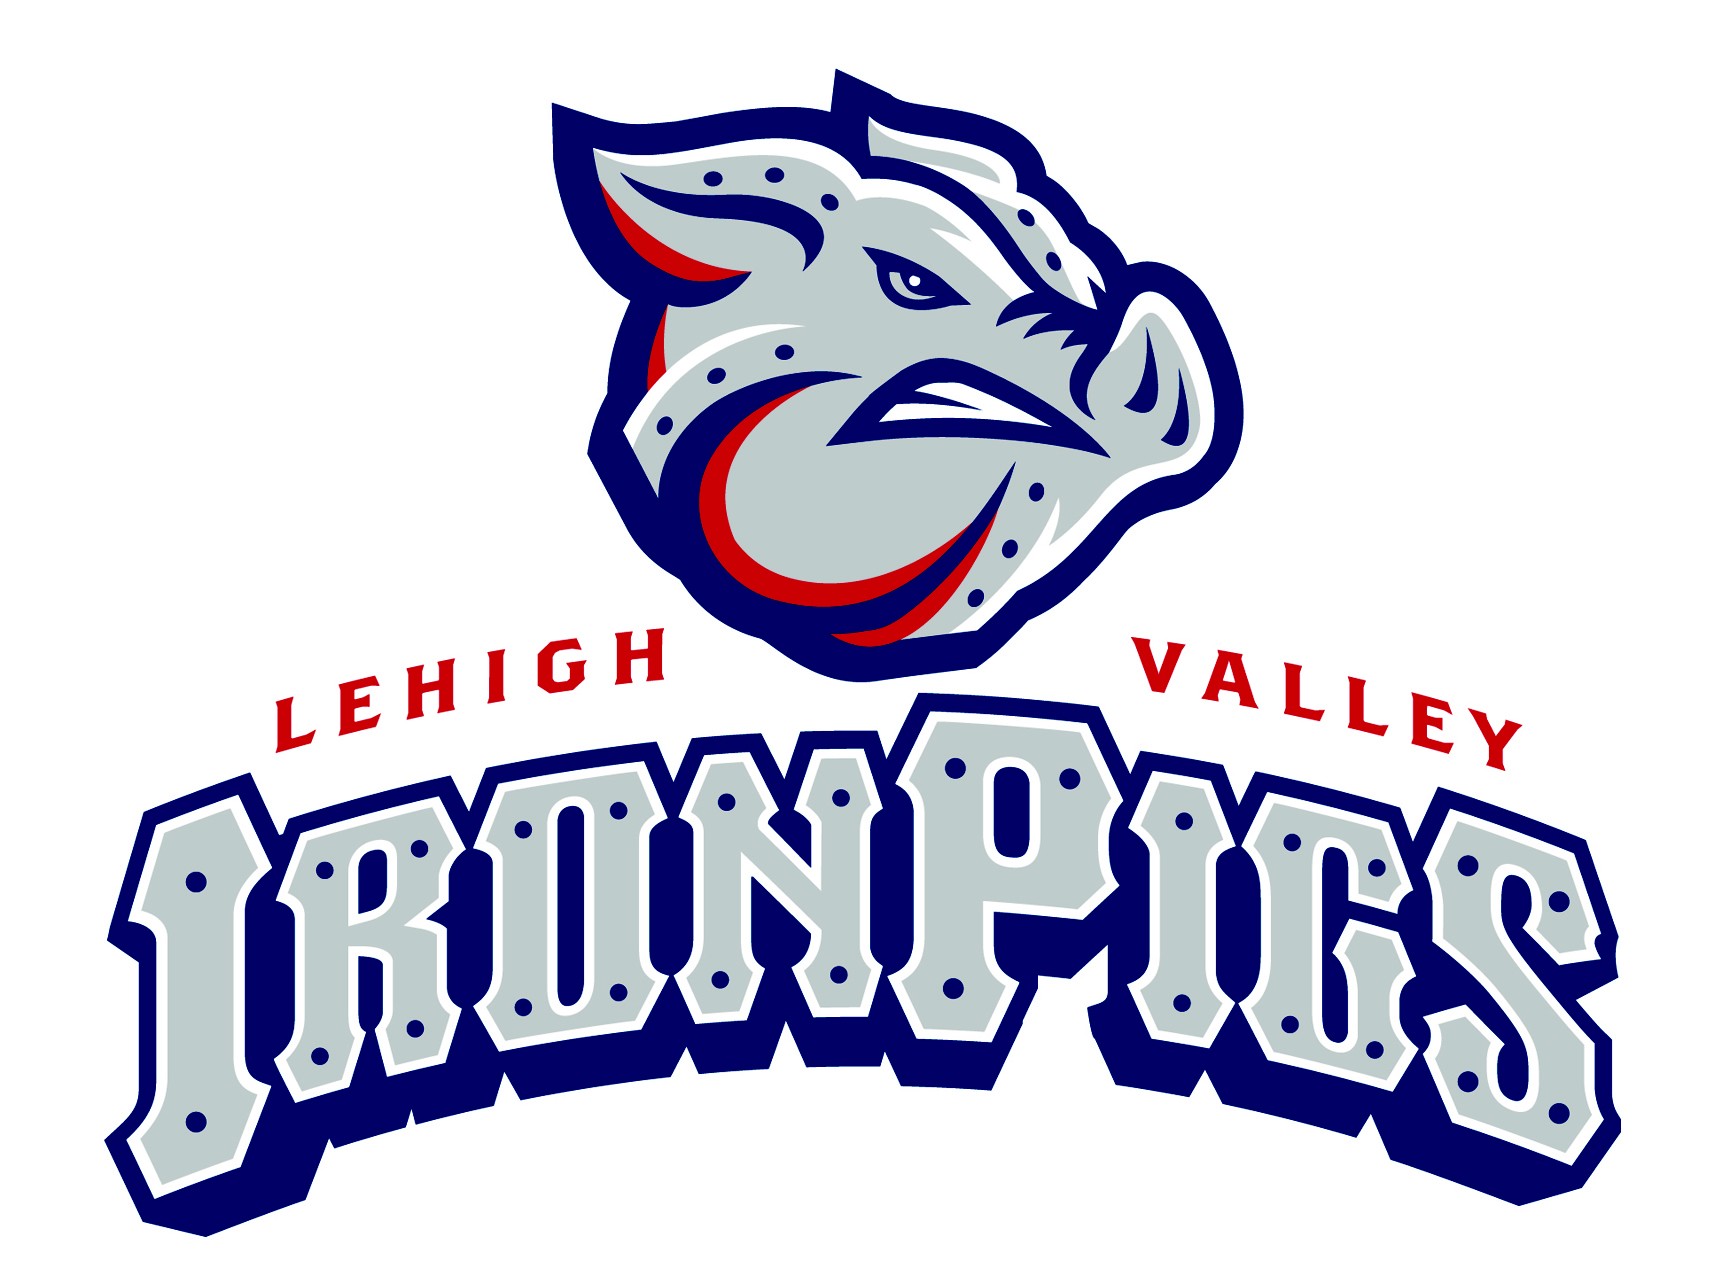 Lehigh Valley Iron Pigs Debut Revolutionary Uniforms